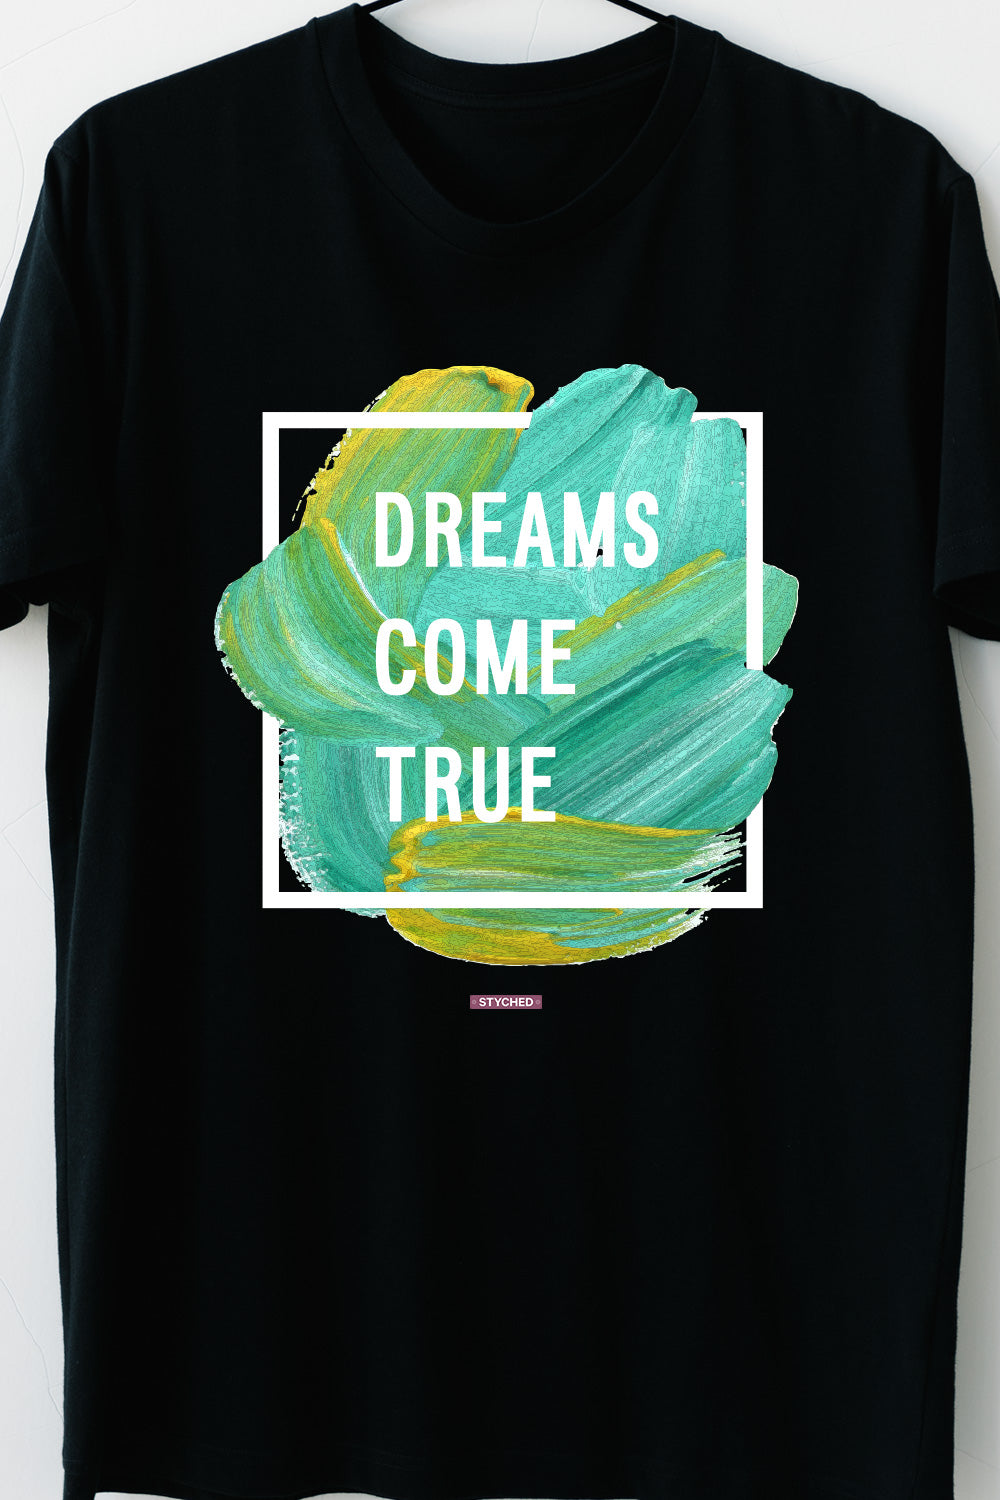 Dreams Come True- Inspirational Black Round Neck Casual TShirt